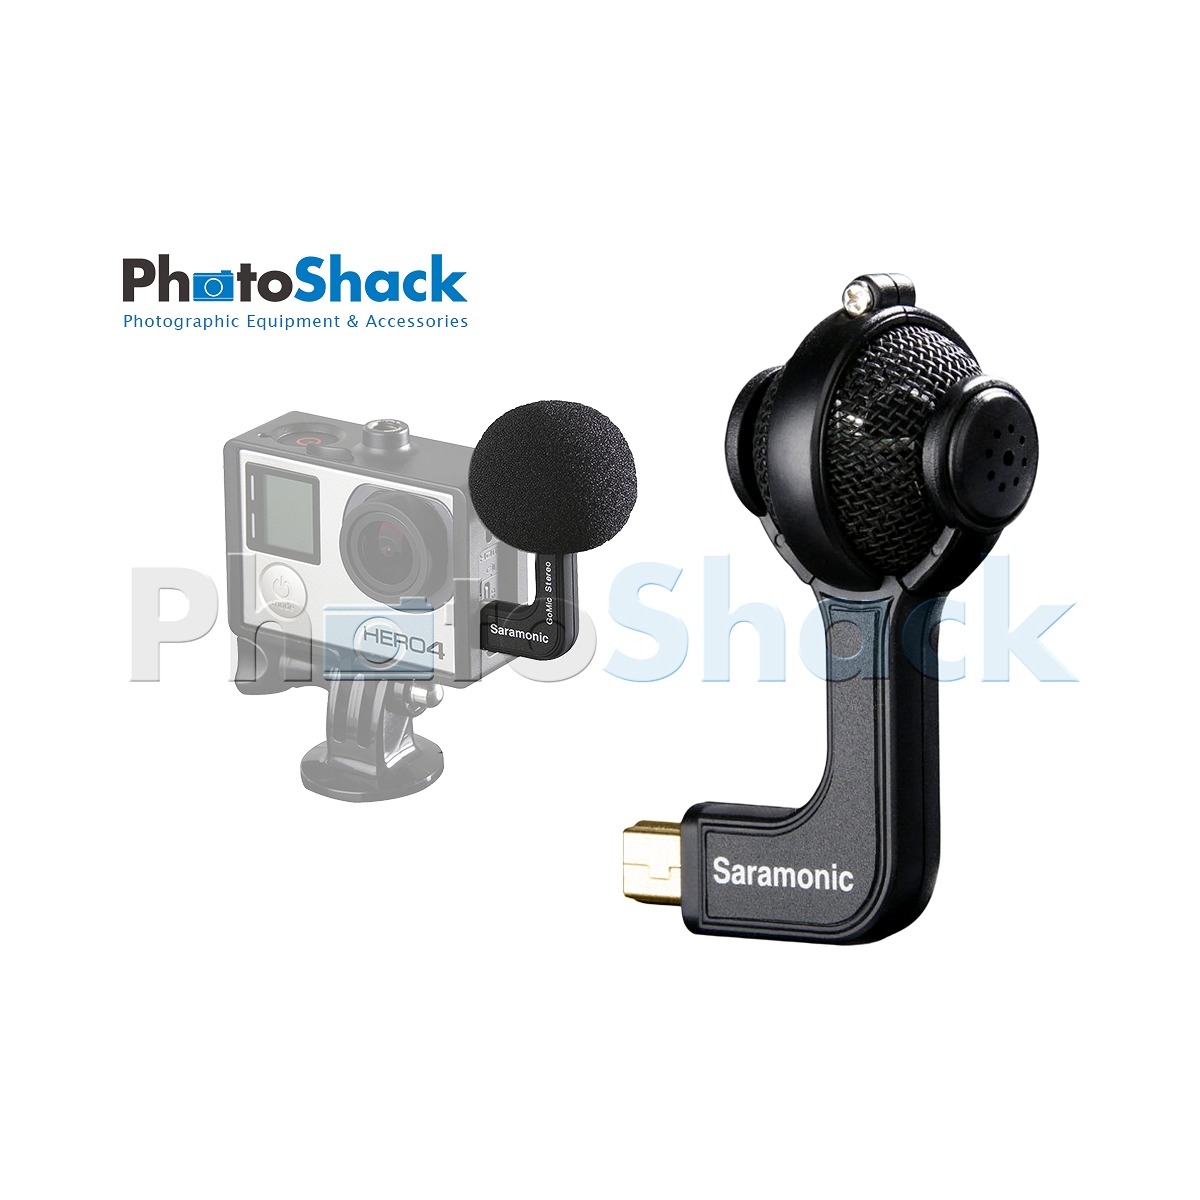 Saramonic Stereo microphone for GoPro